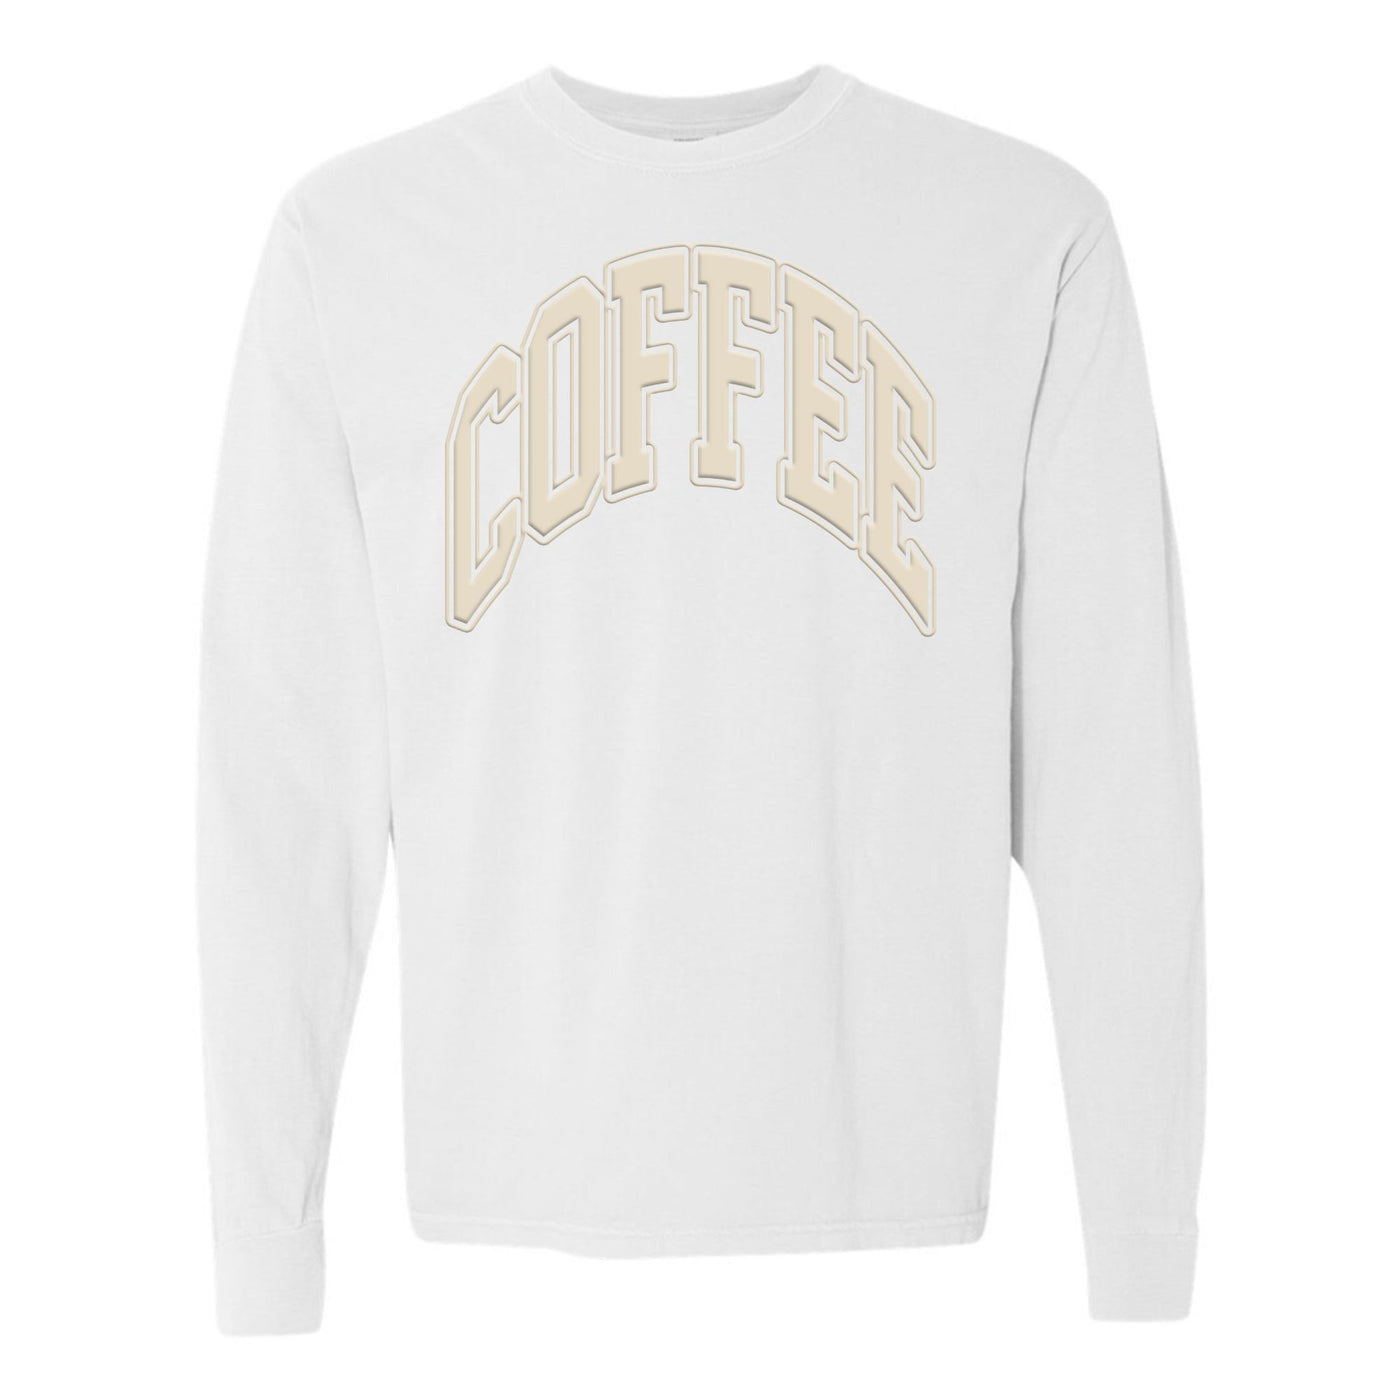 'Coffee' PUFF Long Sleeve T-Shirt